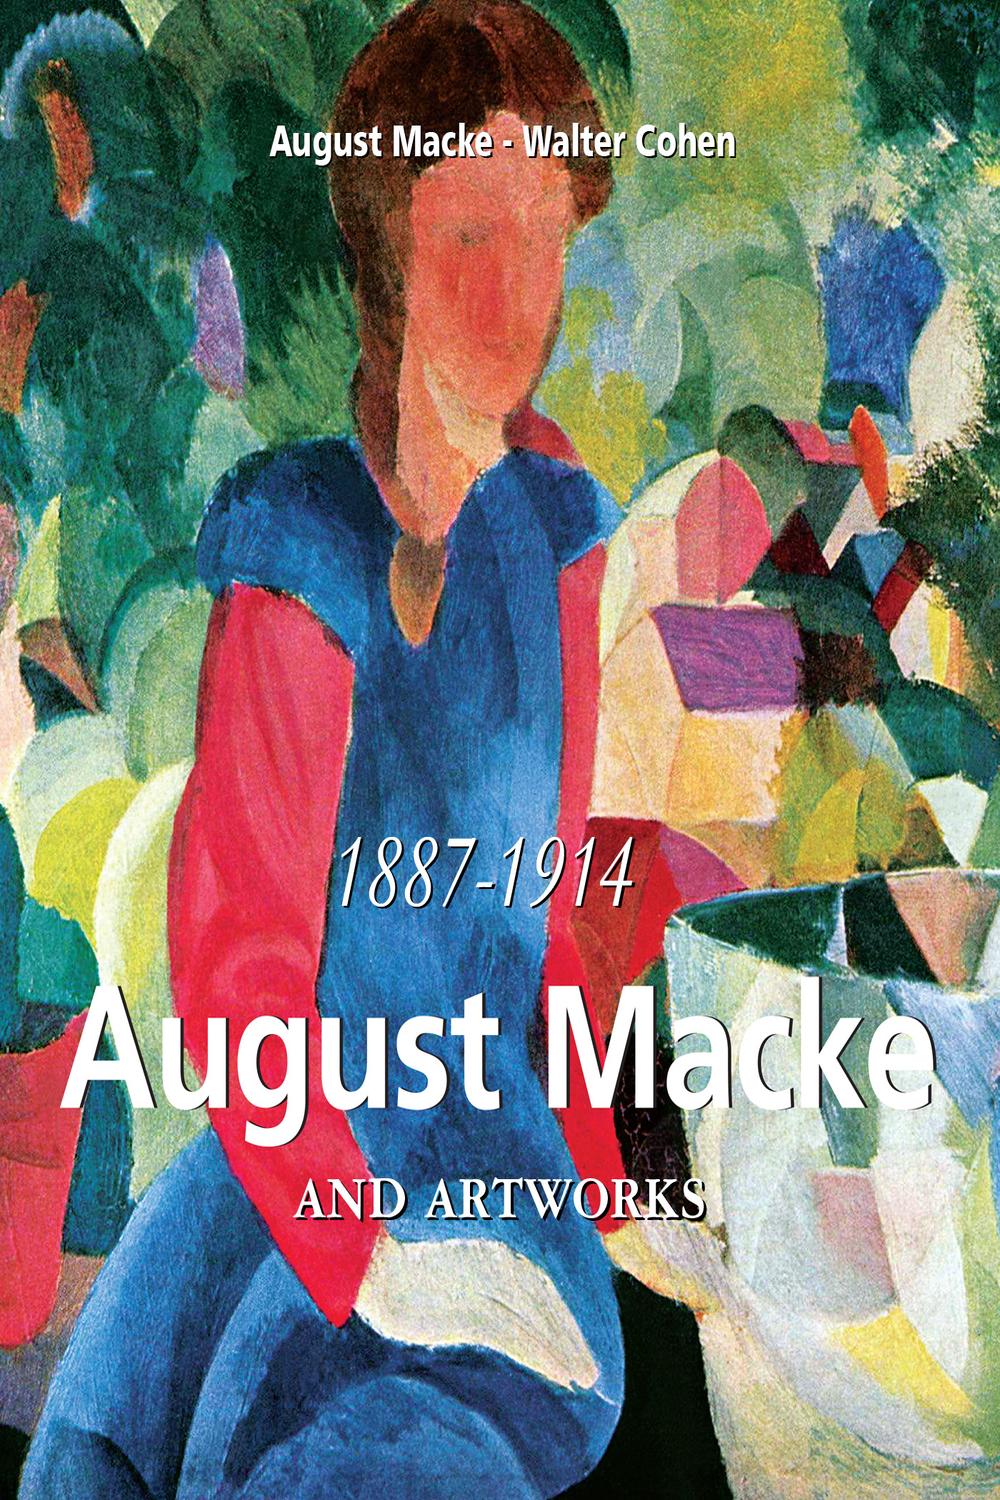 August Macke and artworks - August Macke, Walter Cohen